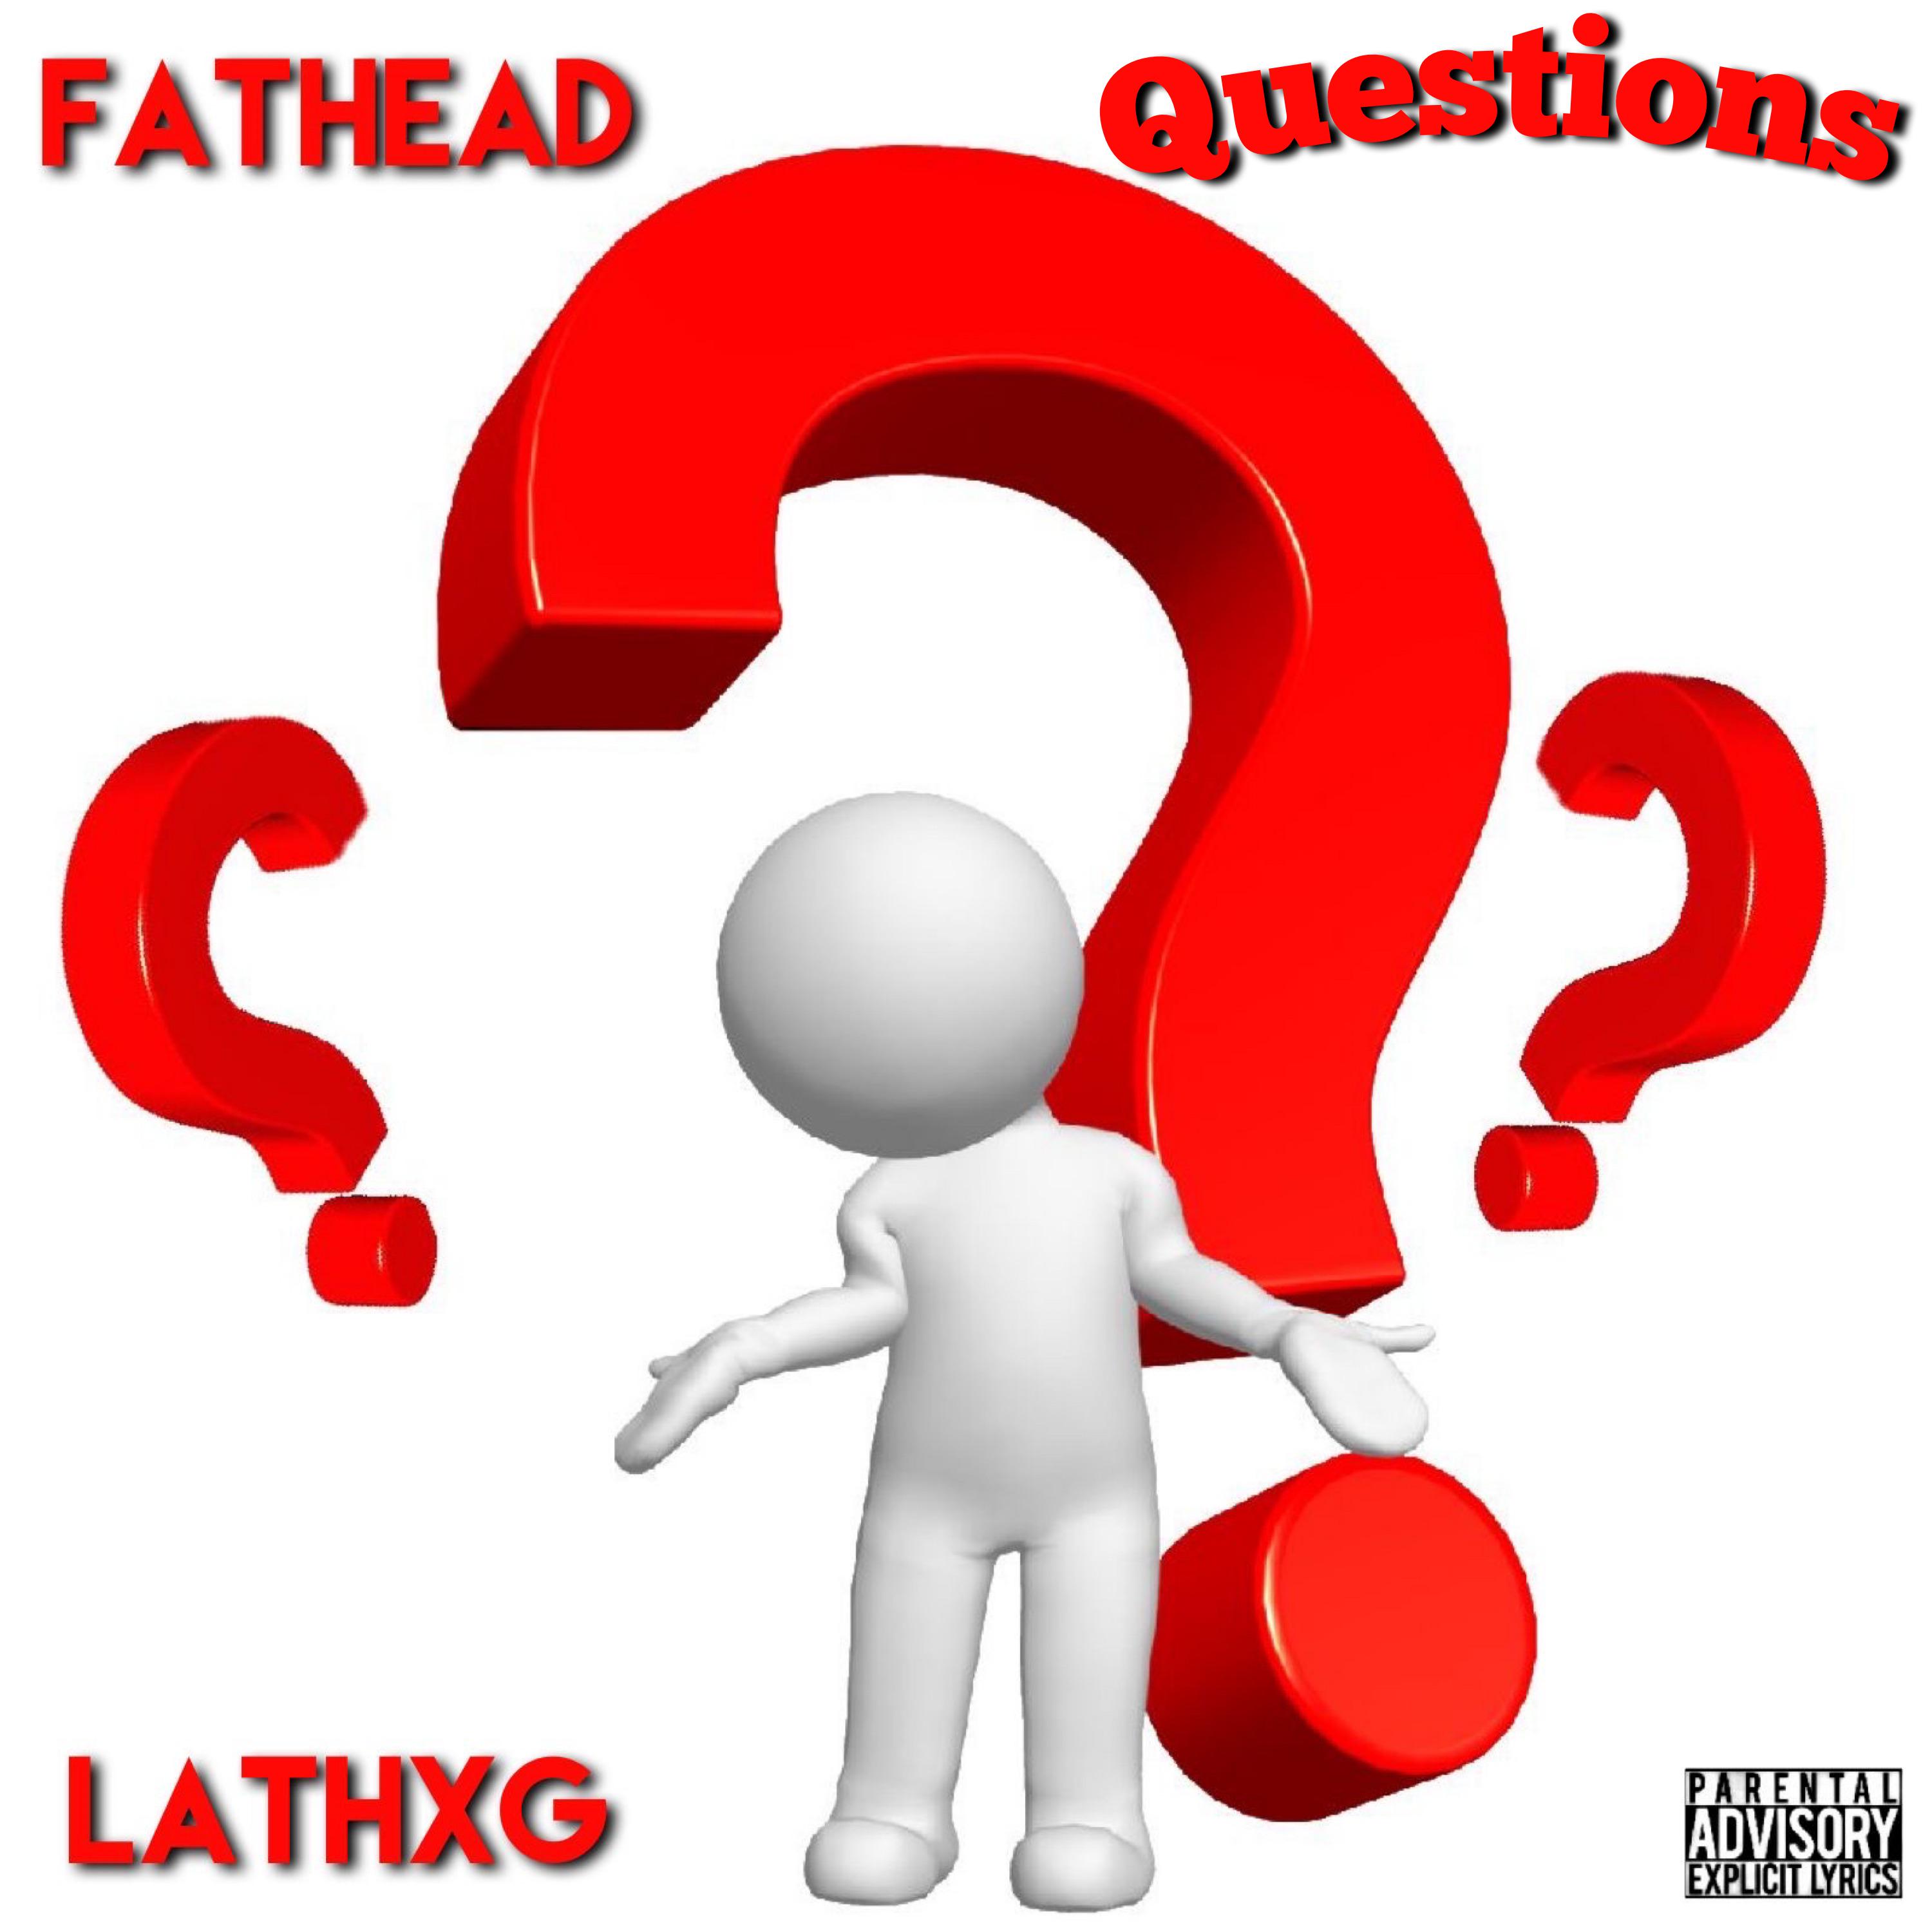 Fathead - Questions